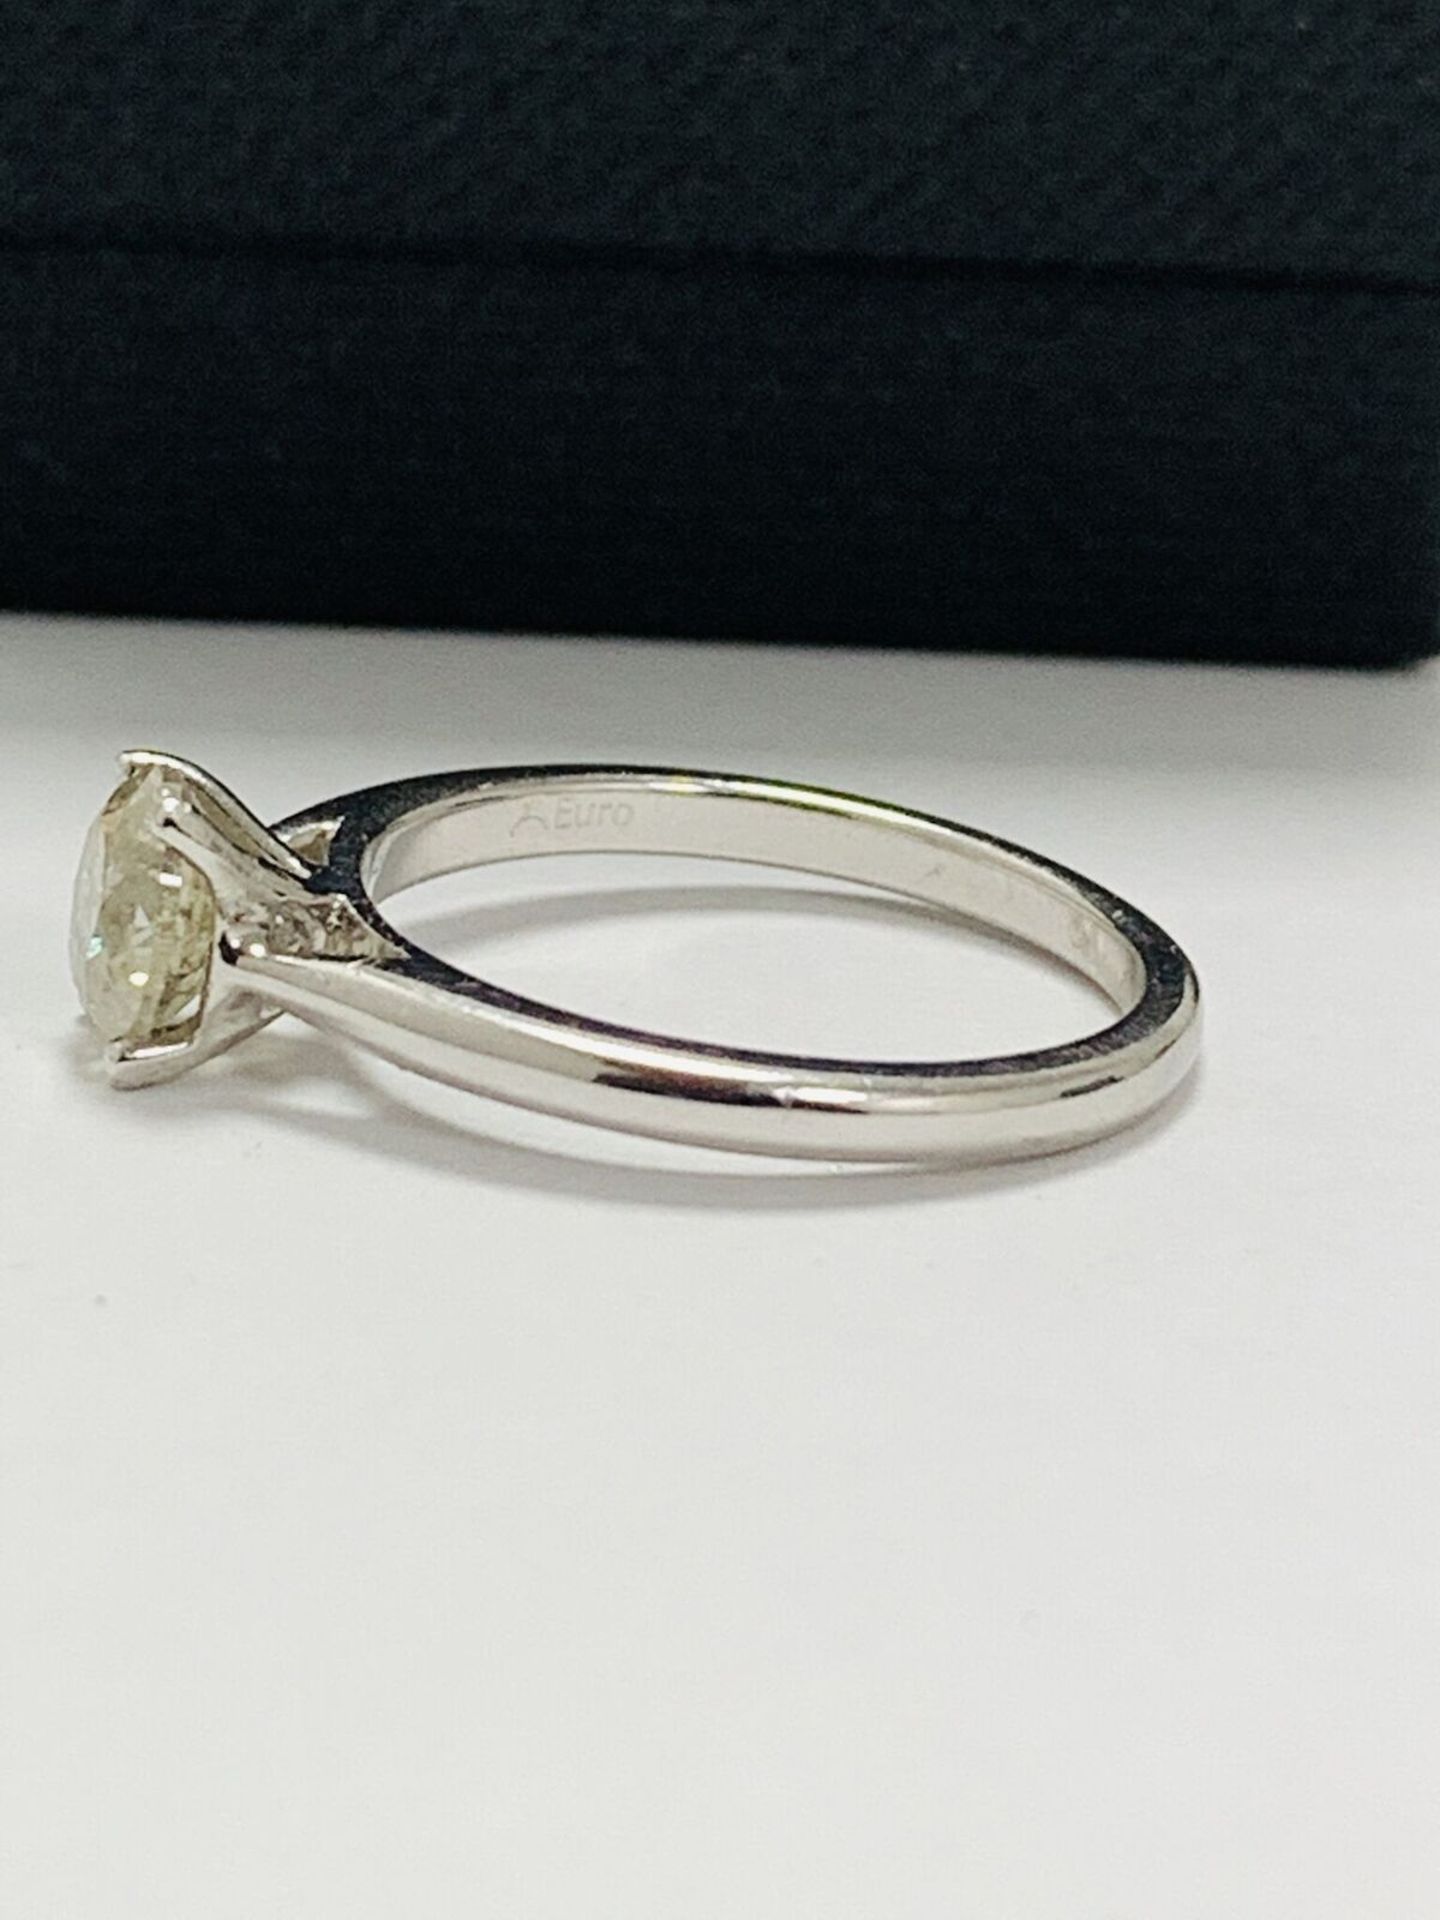 1ct Diamond Solitaire ring,PLatinum setting - Image 3 of 10